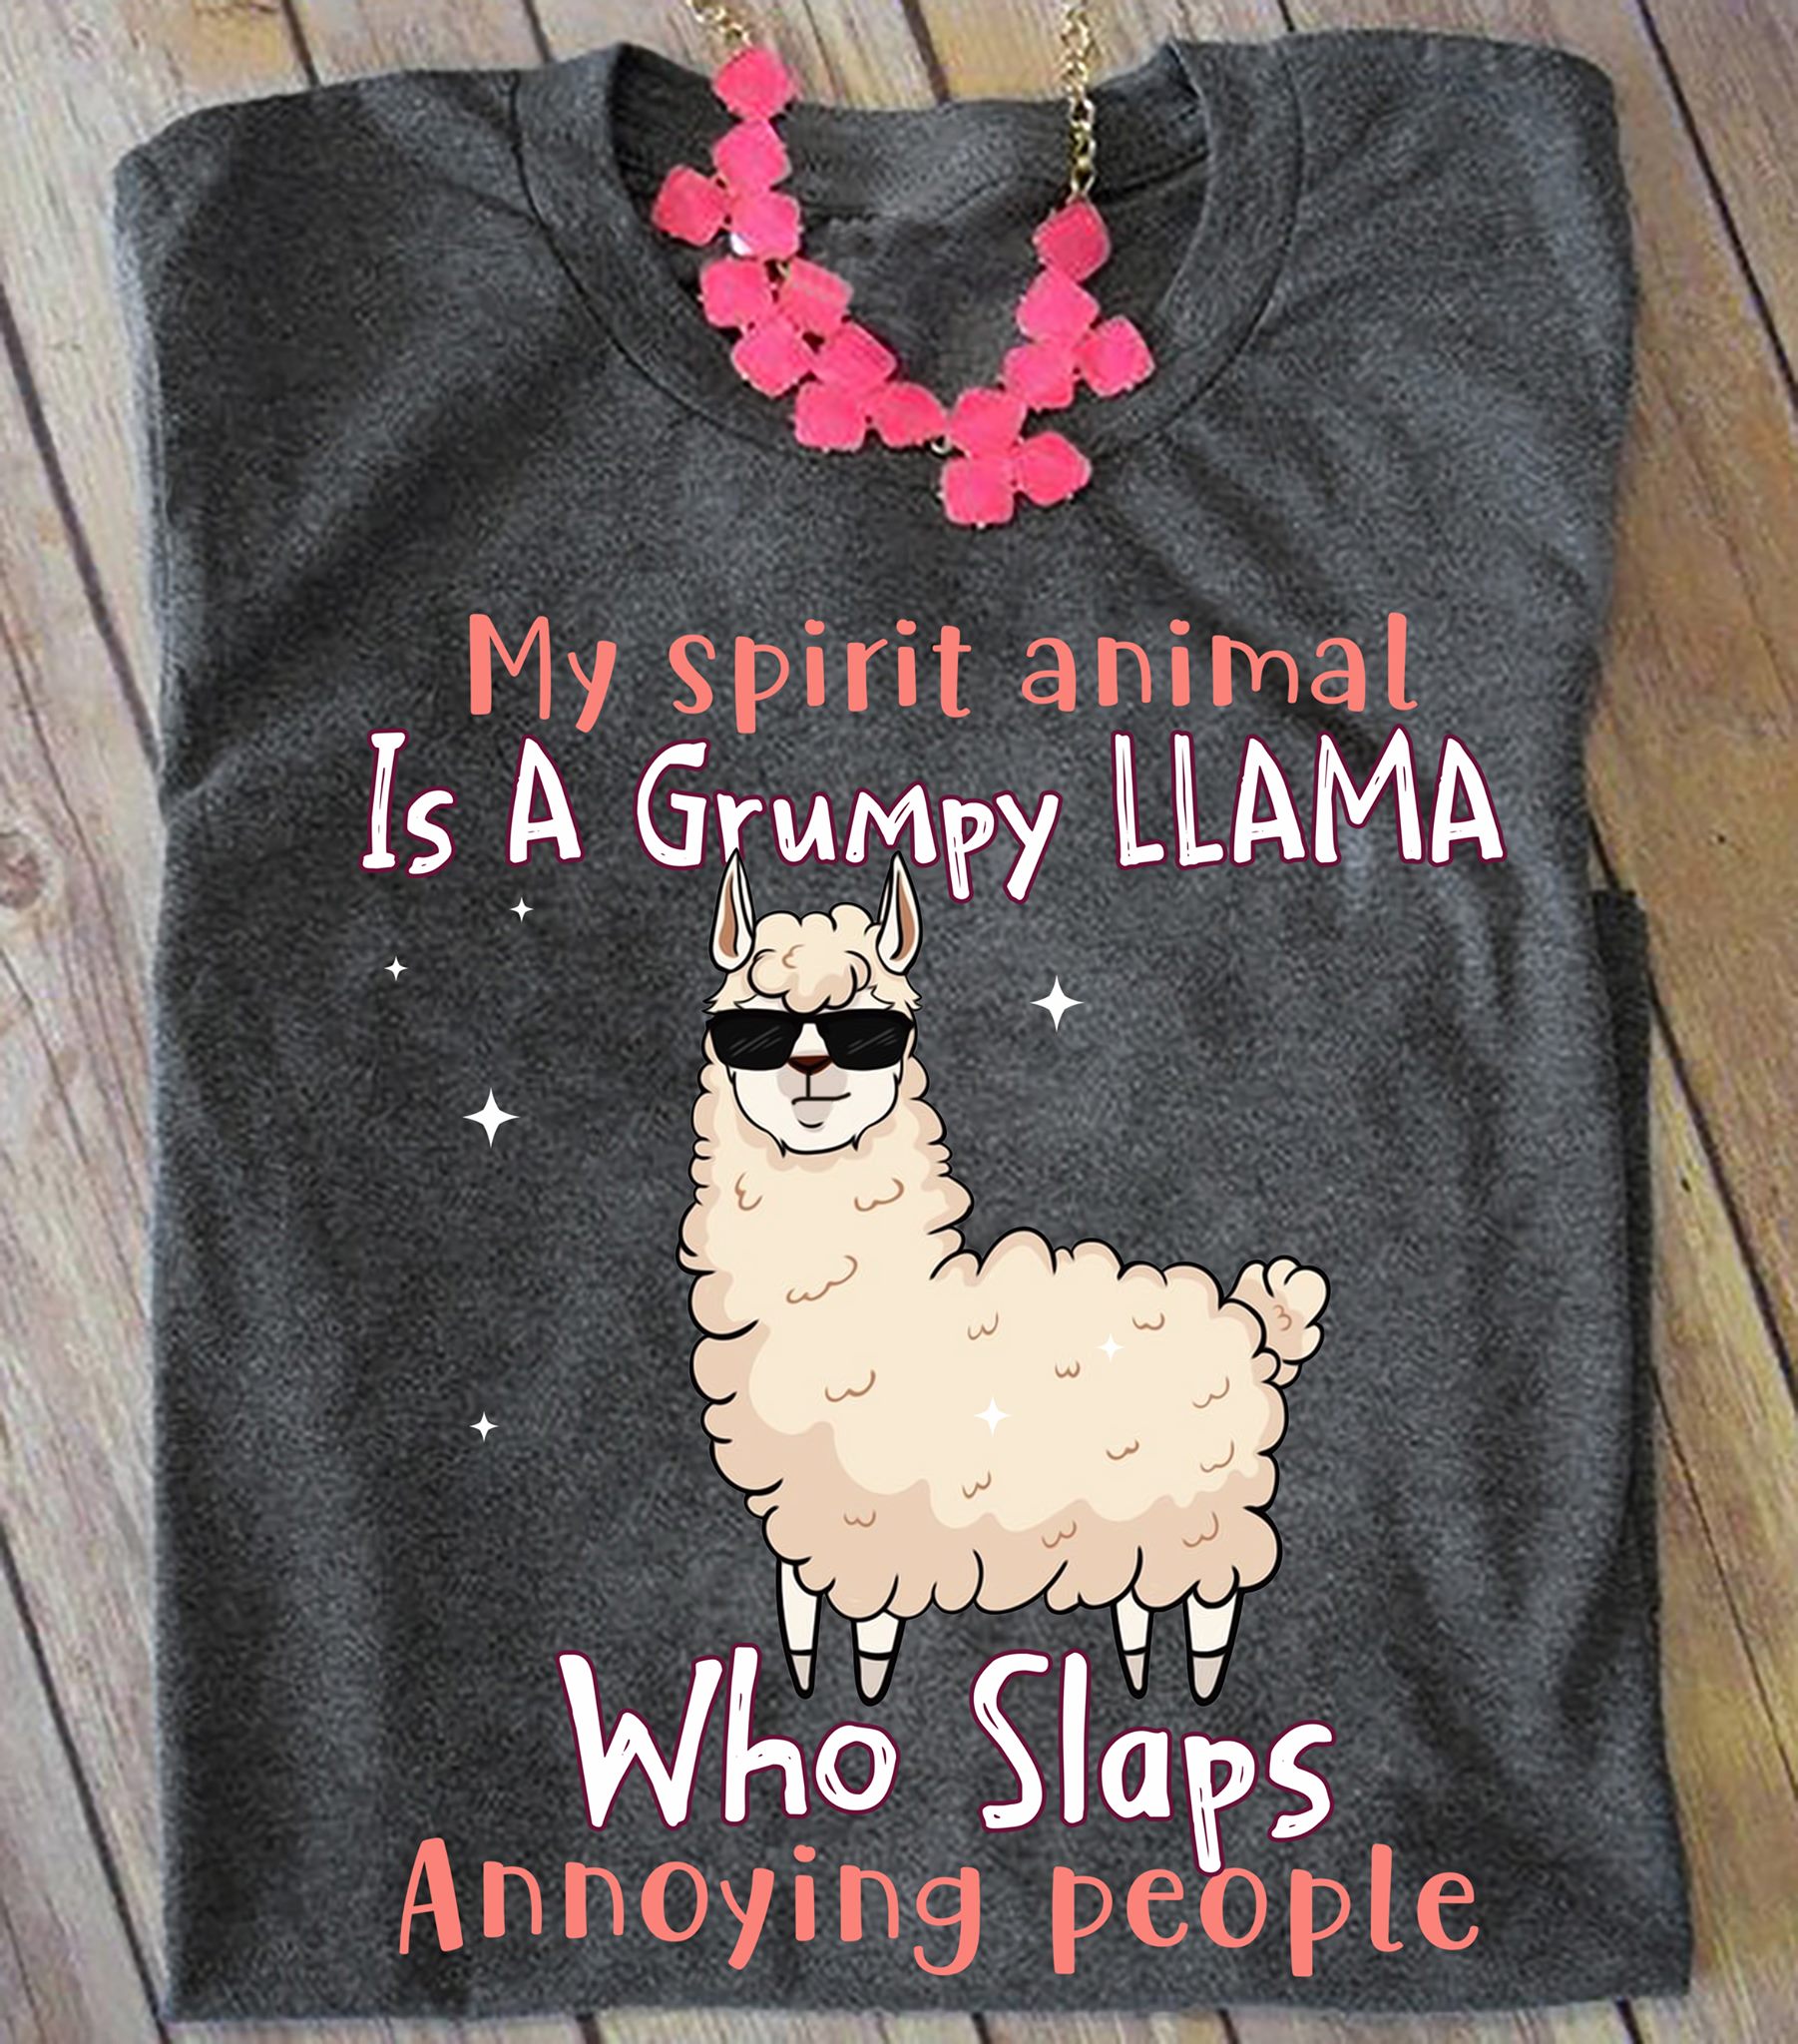 My spirit animal is a grumpy Llama who slaps annoying people